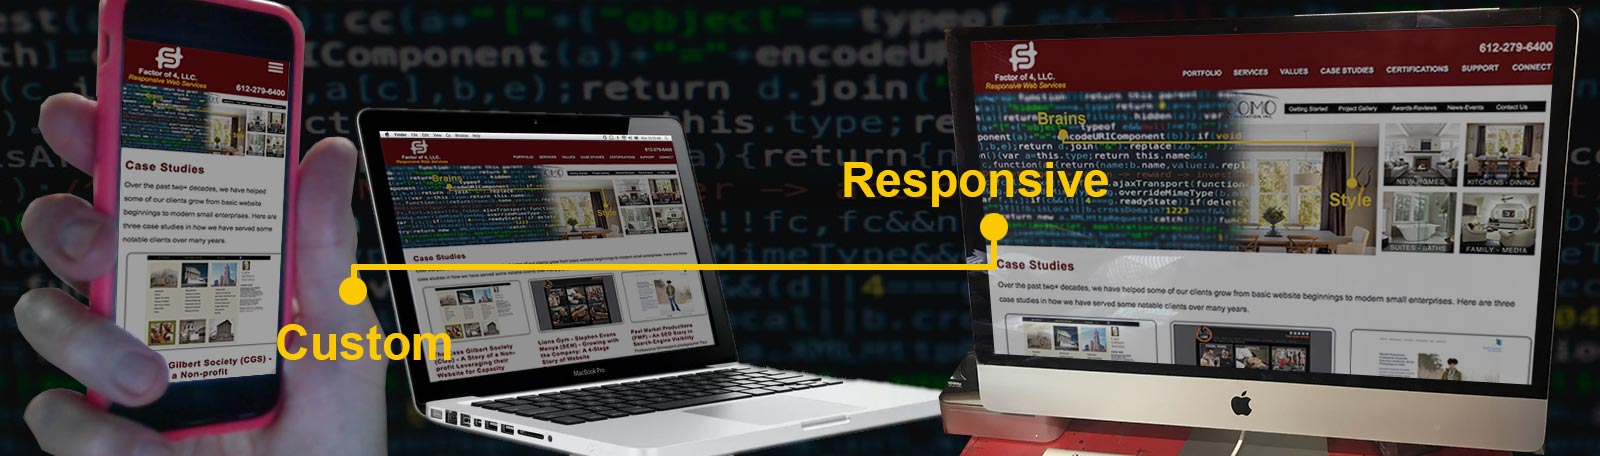 Responsive web design and web site hosting